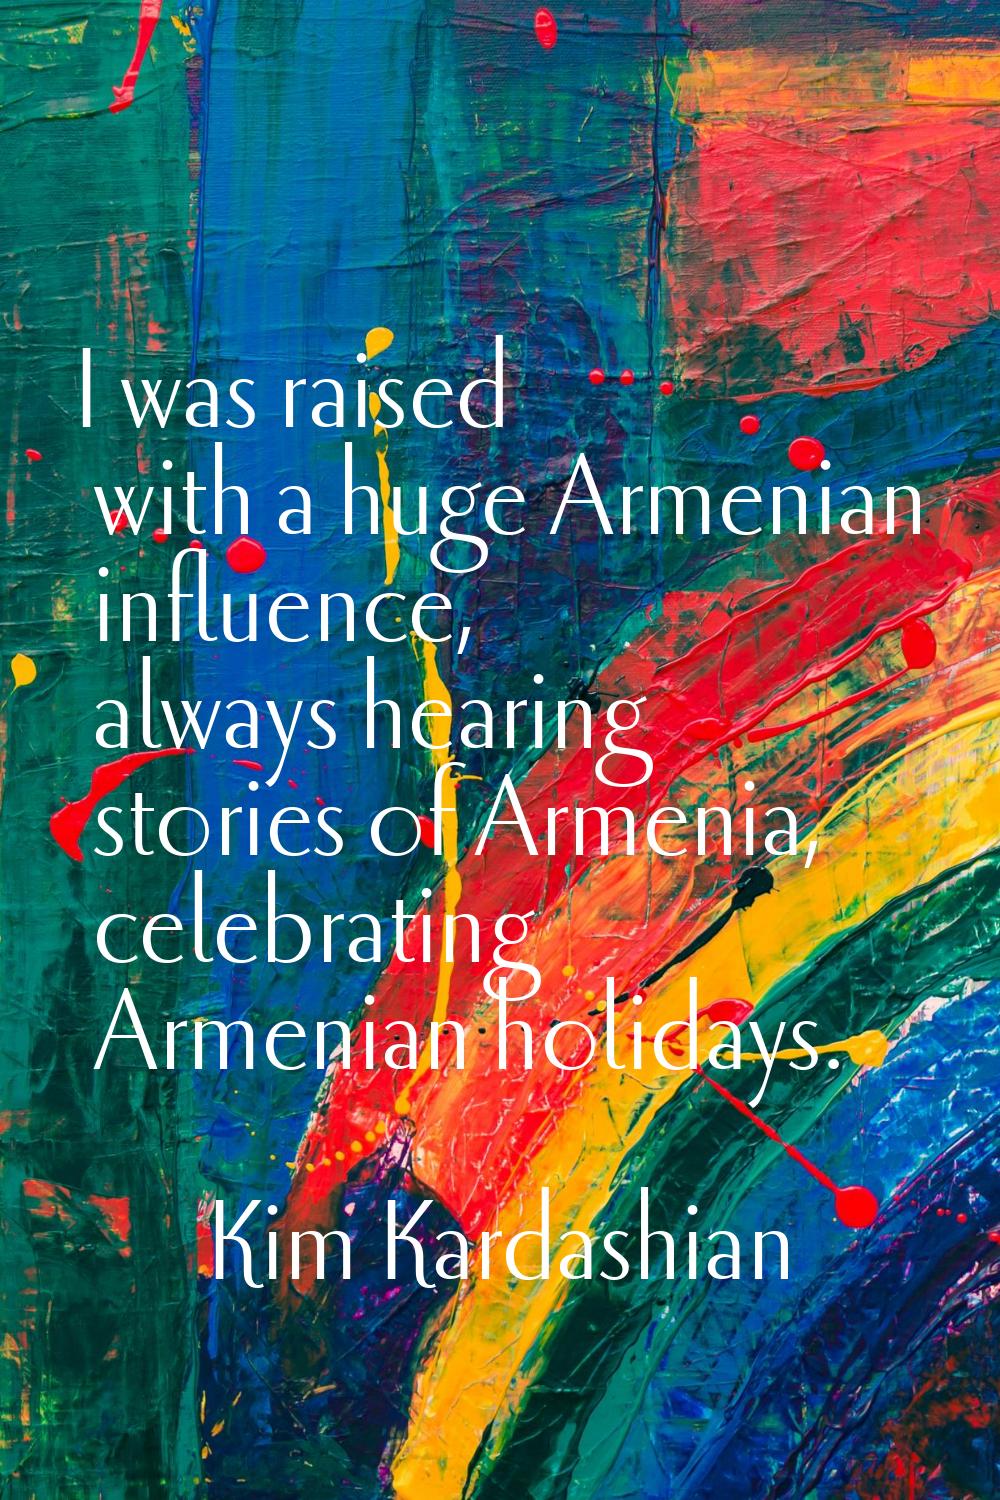 I was raised with a huge Armenian influence, always hearing stories of Armenia, celebrating Armenia